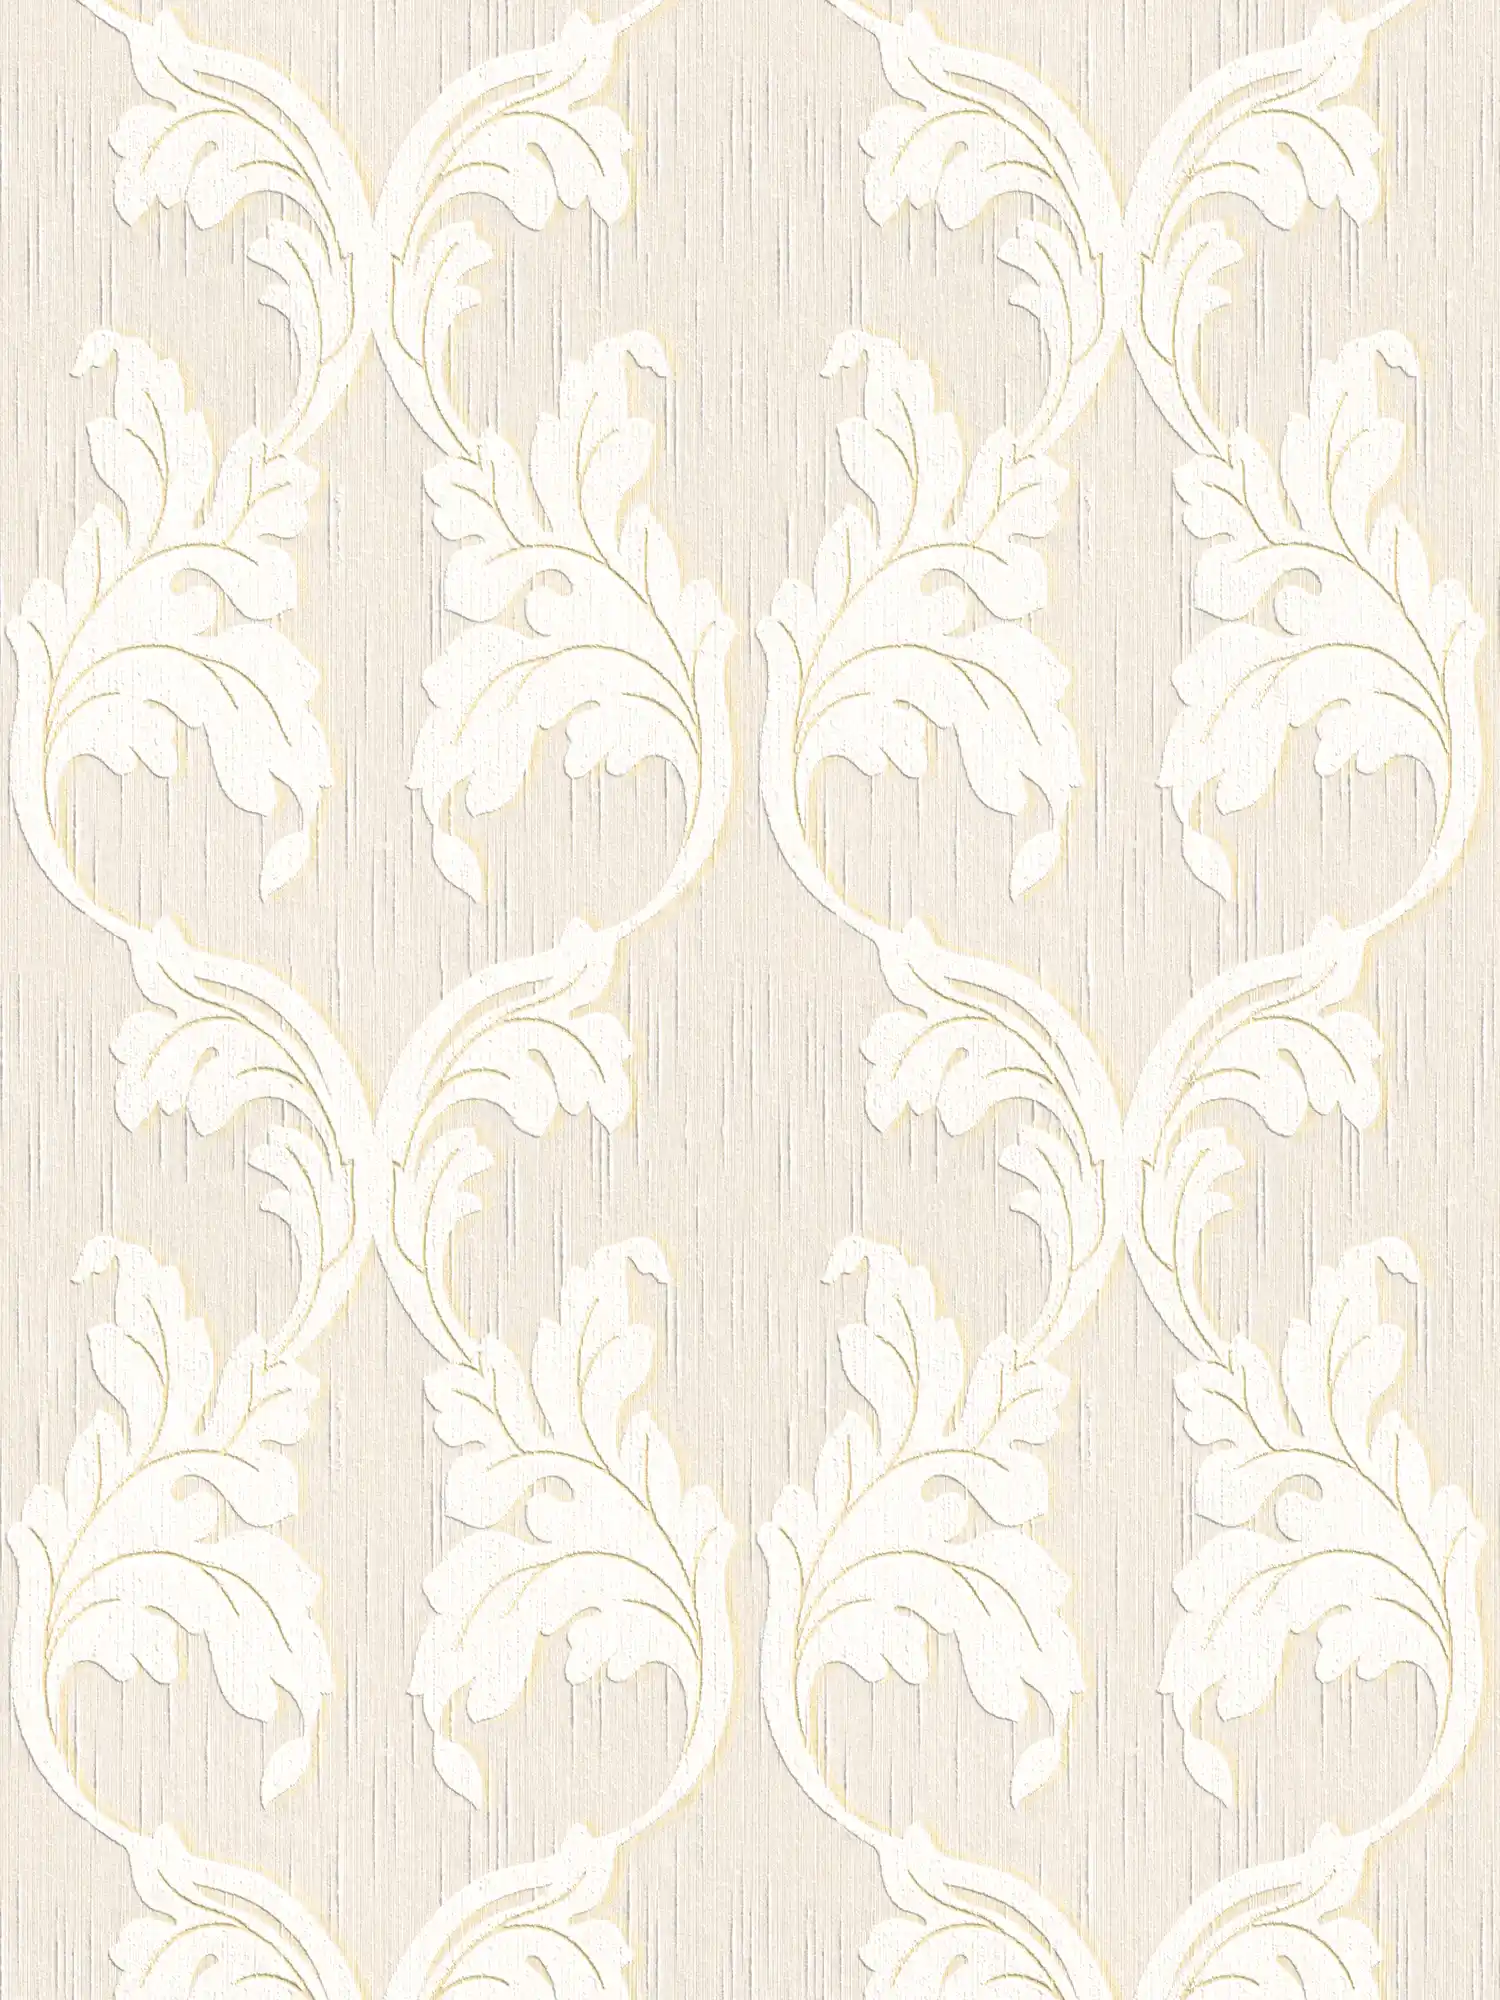 Premium textile wallpaper with ornament vines - beige, cream, gold
